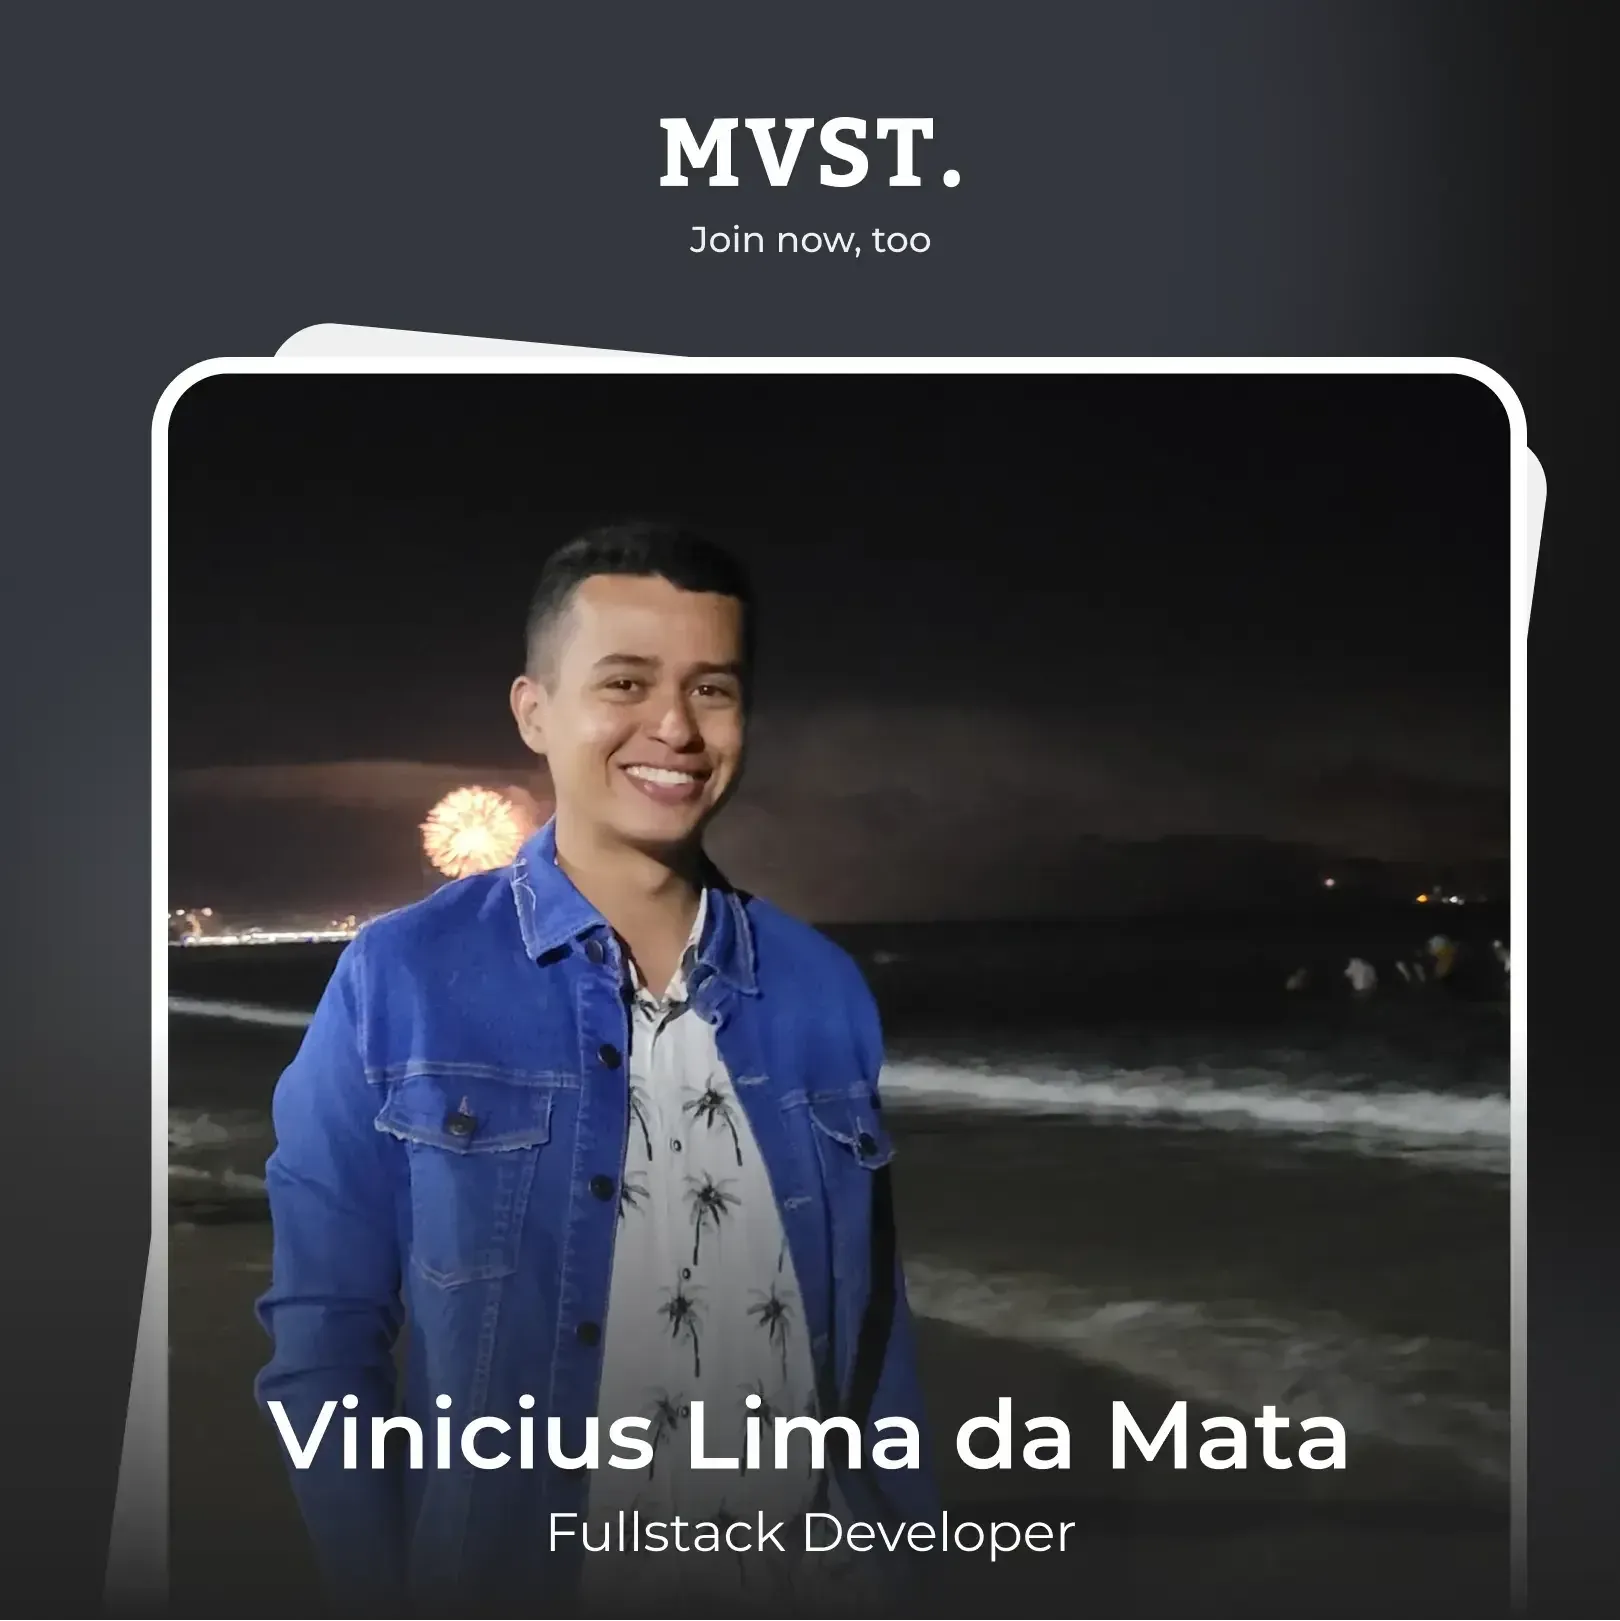 Welcome to MVST, Vinicius!